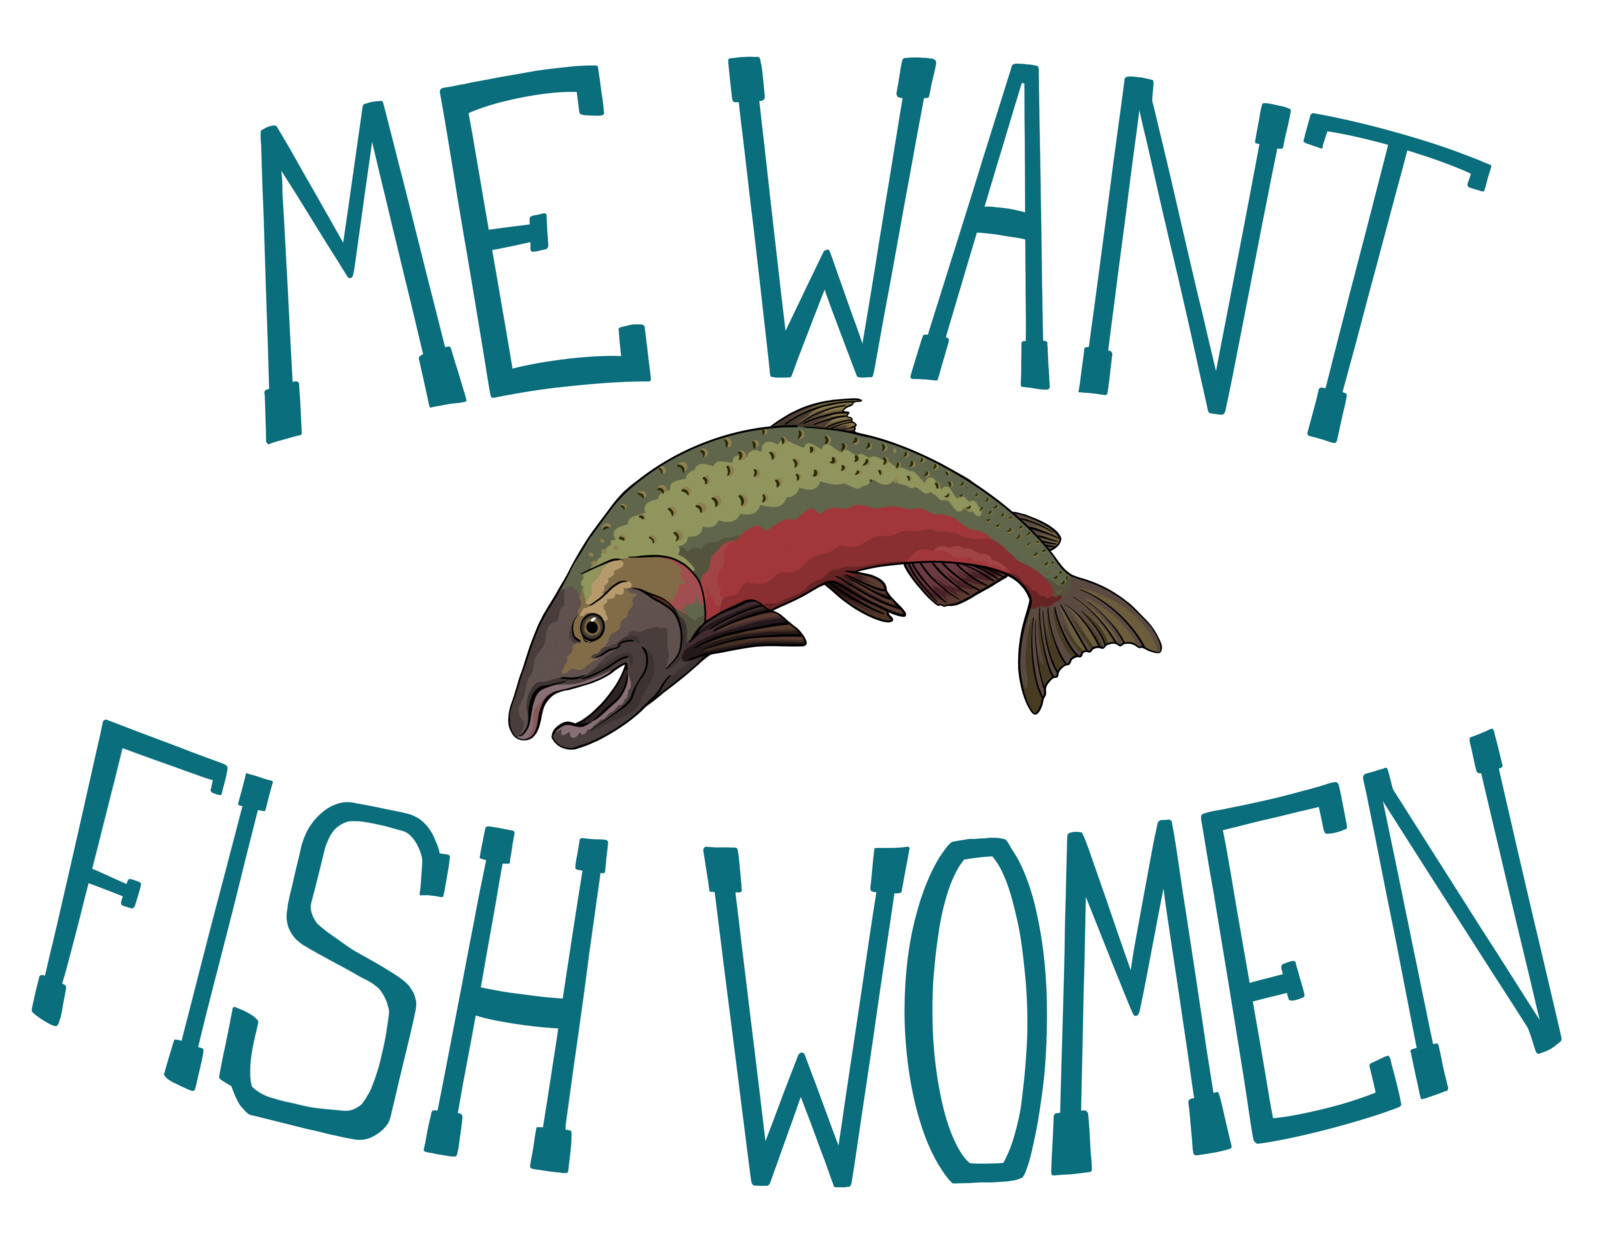 "Me Want Fish Women" salmon design